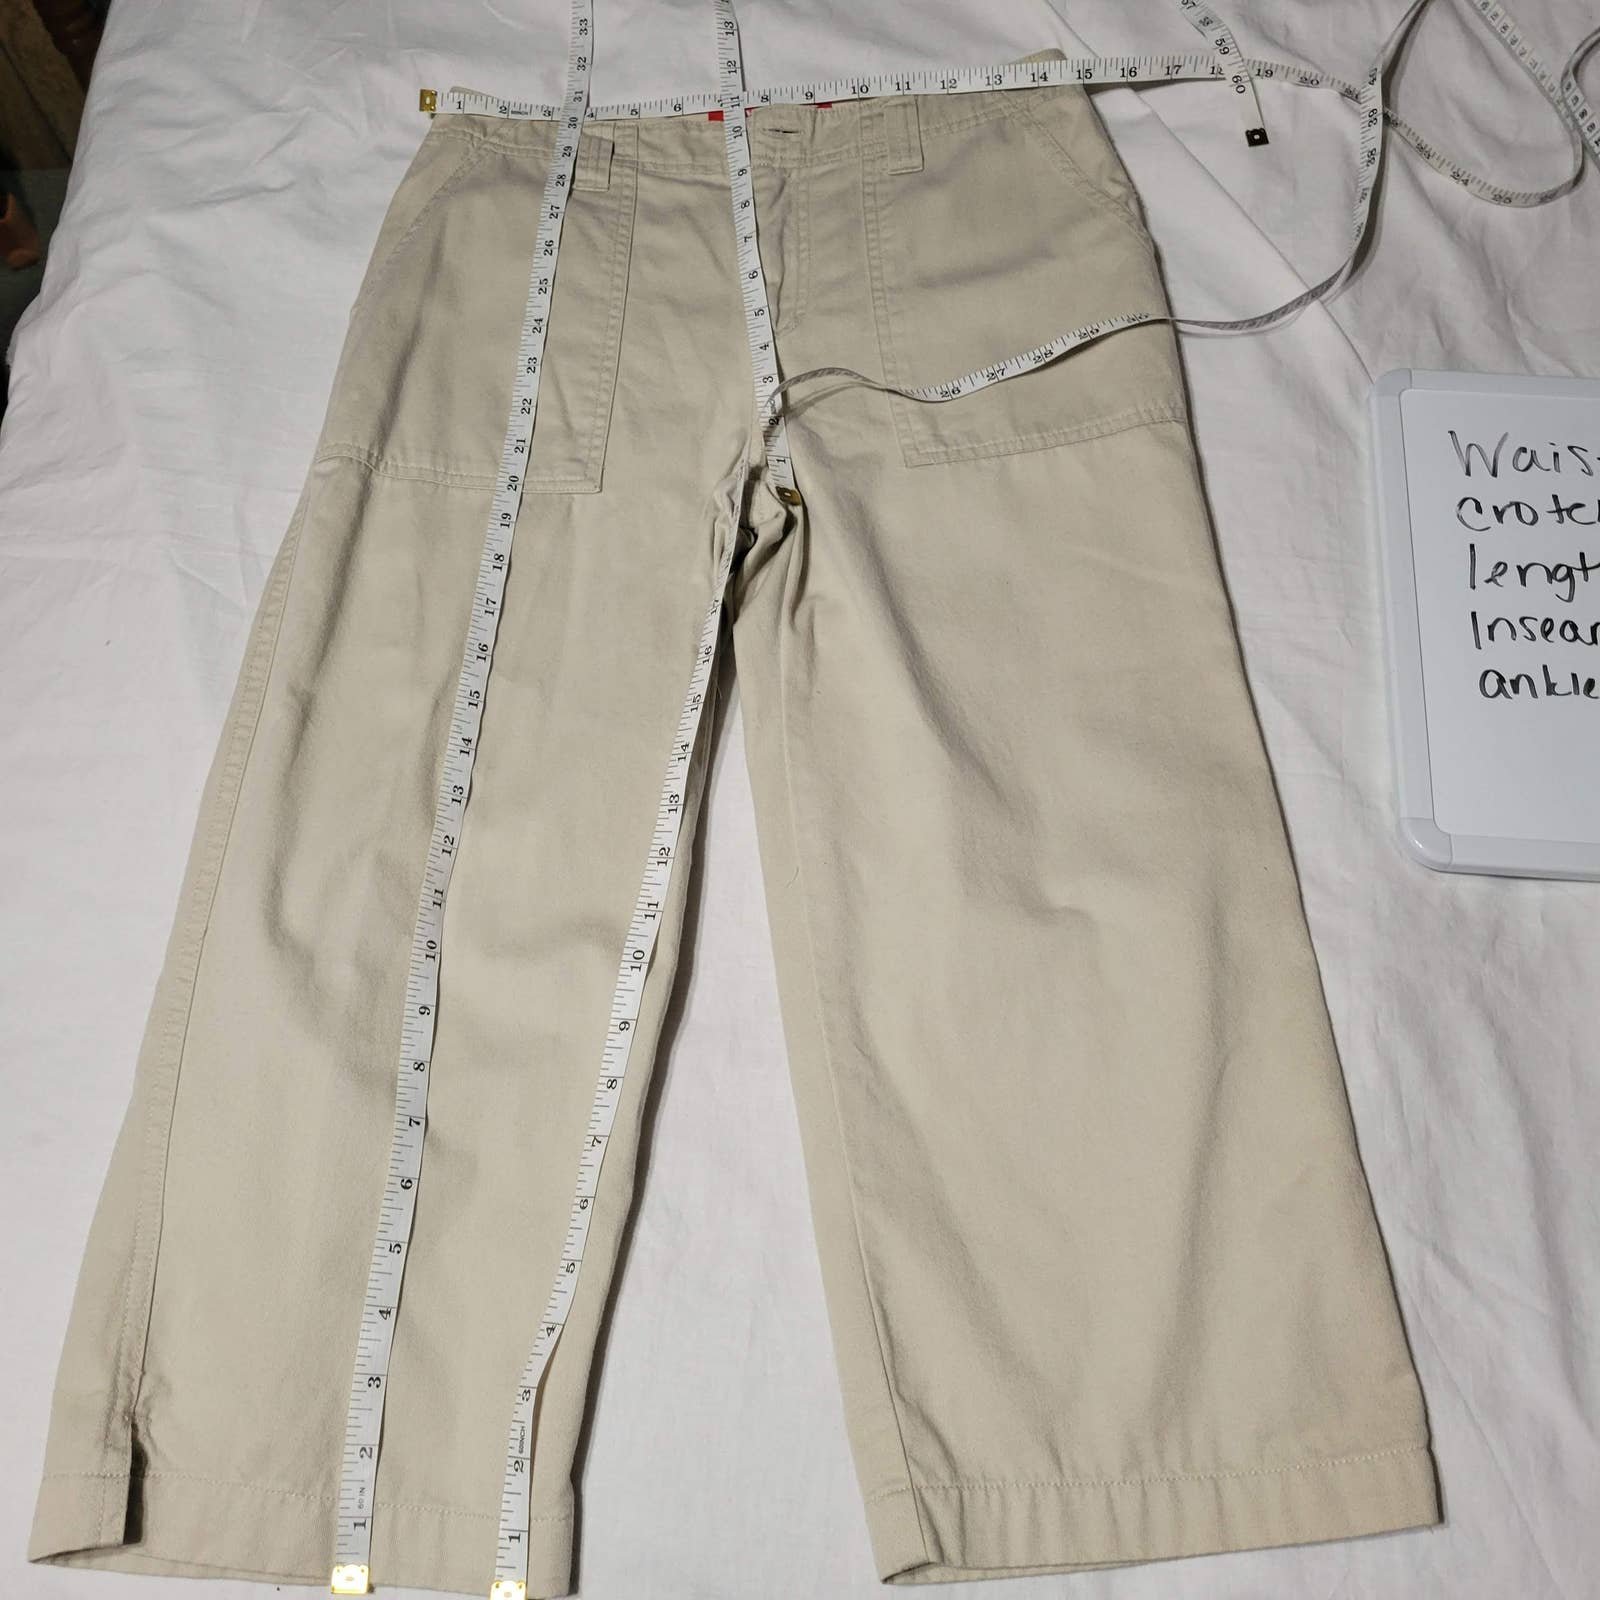 Personality Gloria Vanderbilt Cream Colored Short Pants 6P pgMYizzjP Fashion